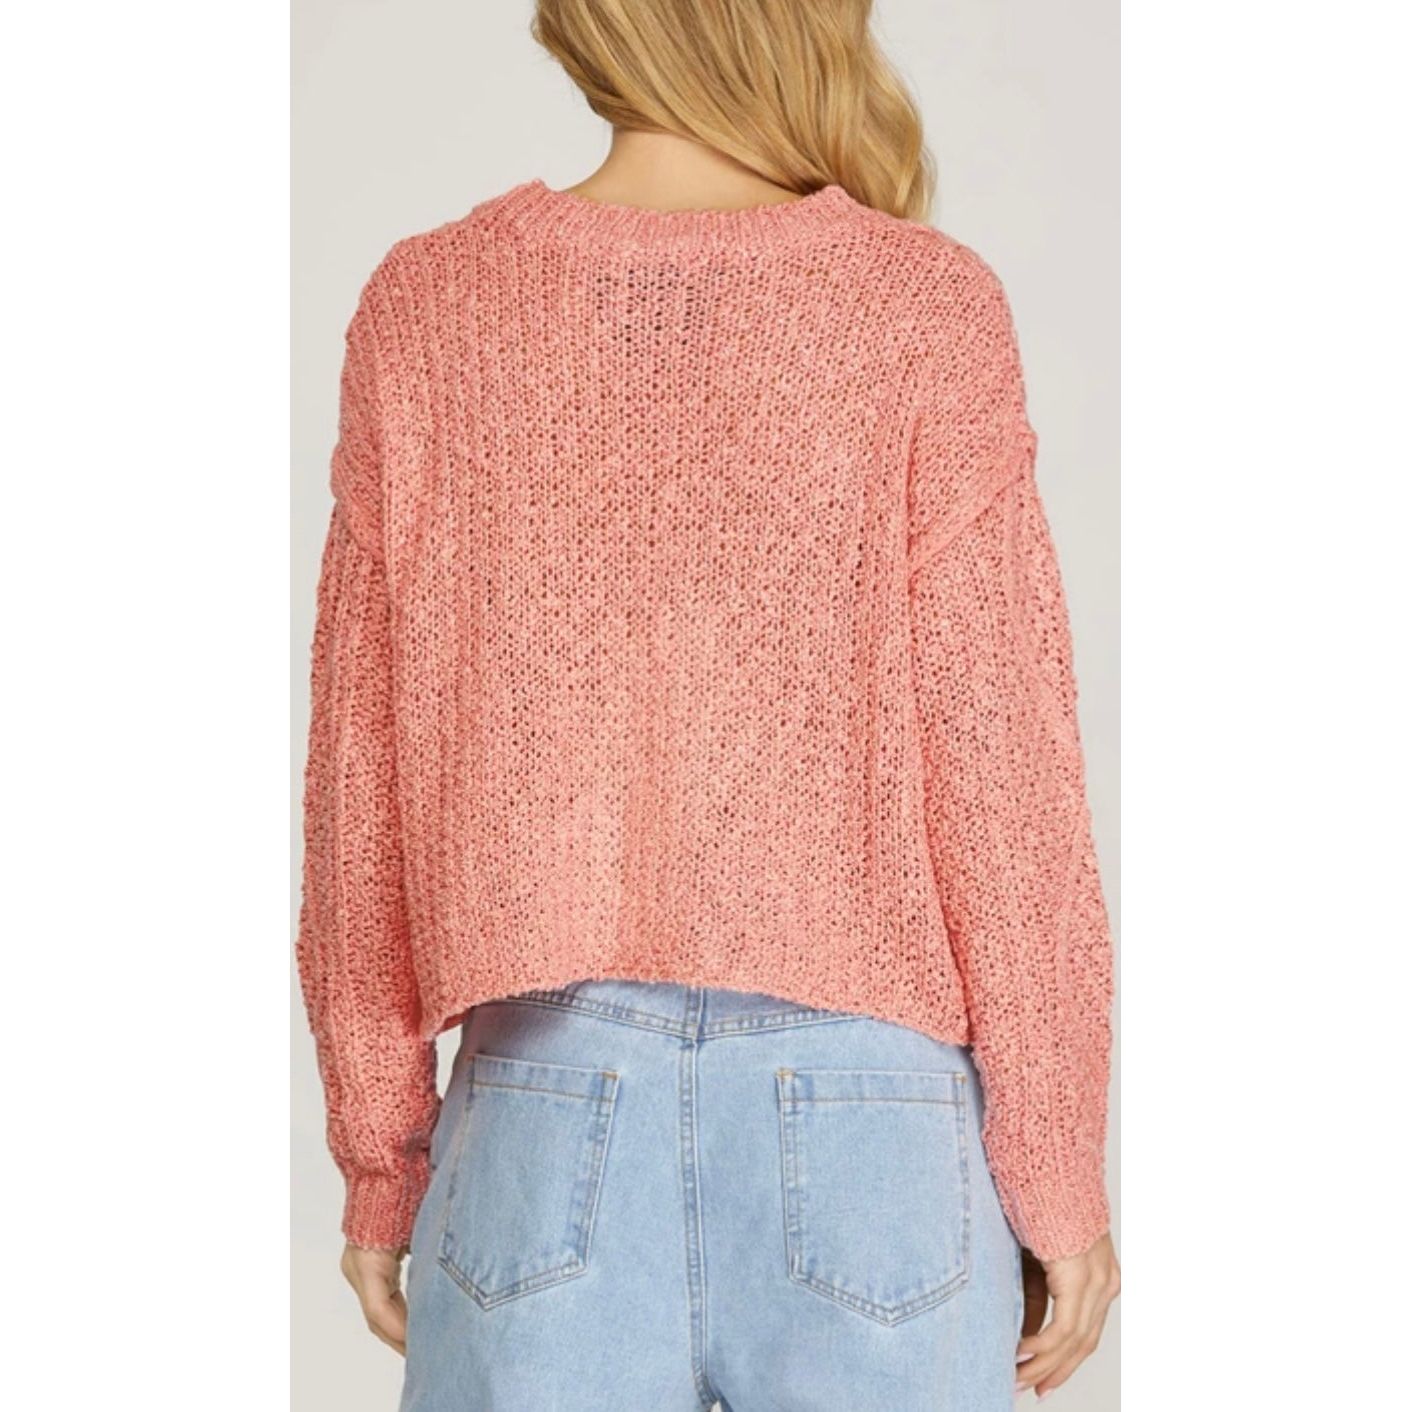 Peachy keen knit top